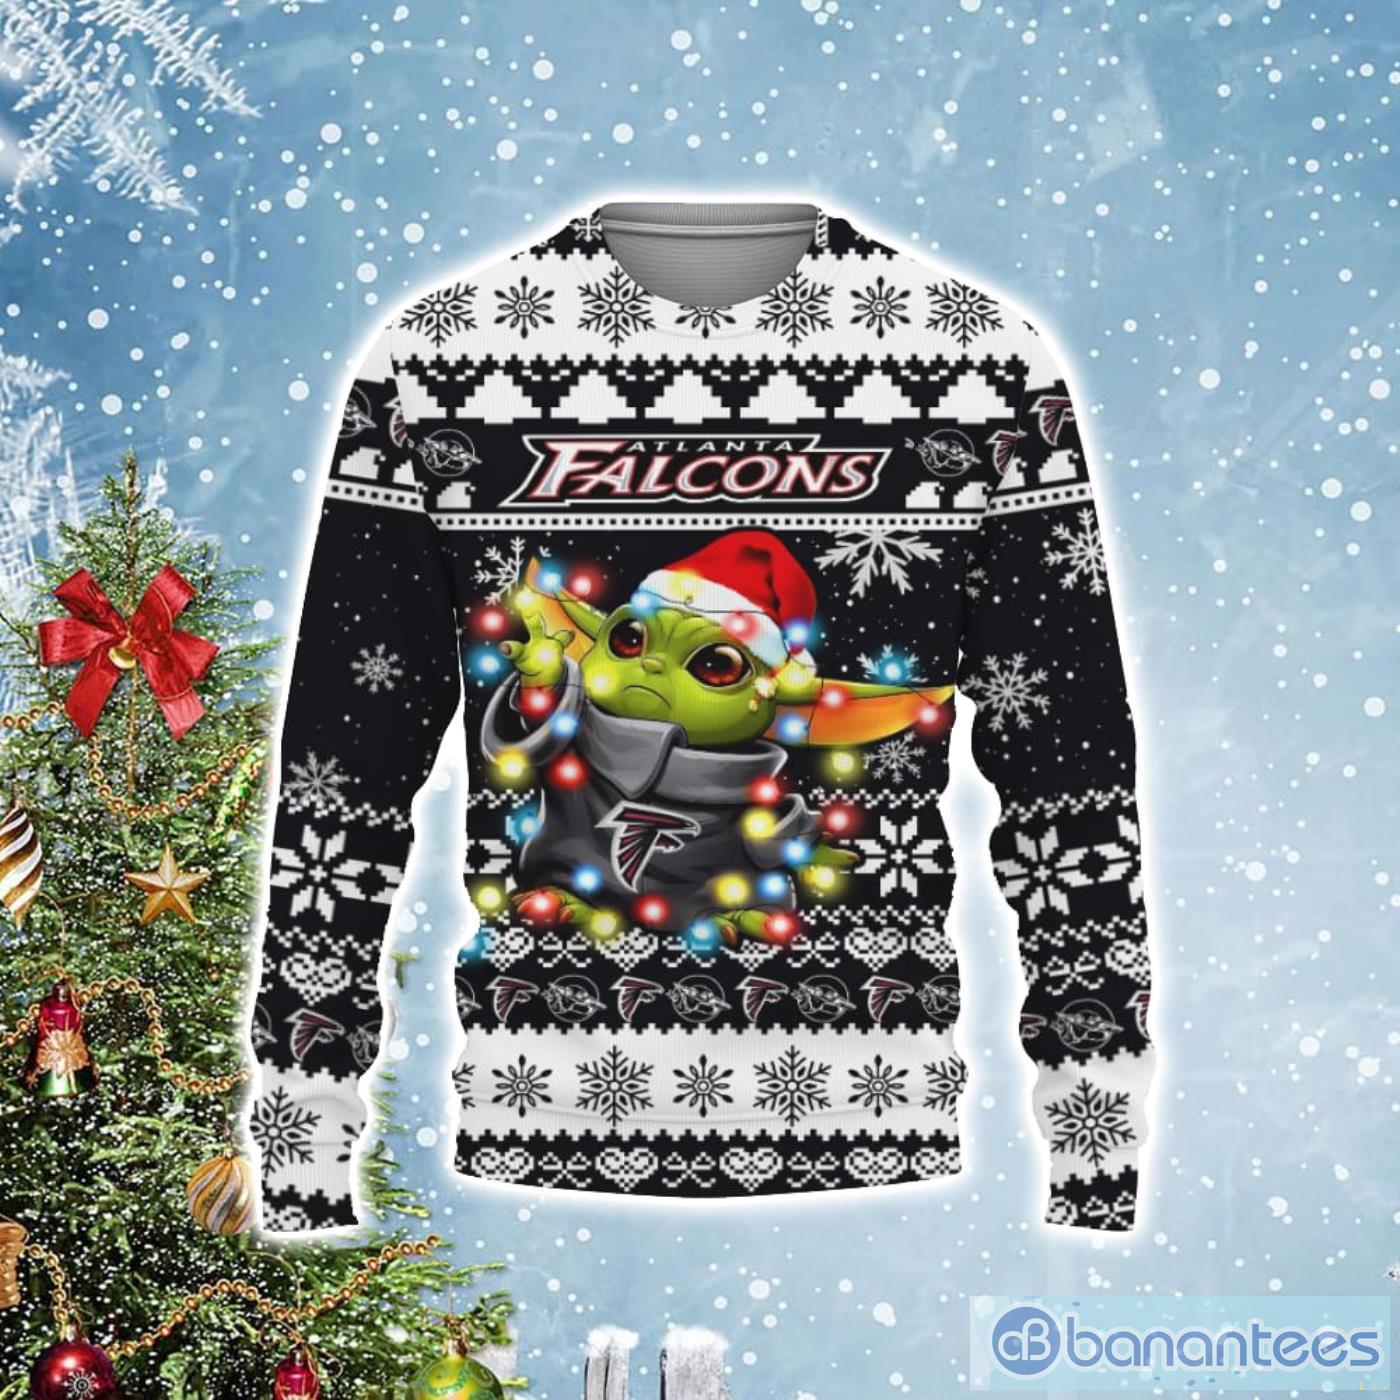 Atlanta Falcons Baby Yoda Star Wars Ugly Christmas Sweater Product Photo 1